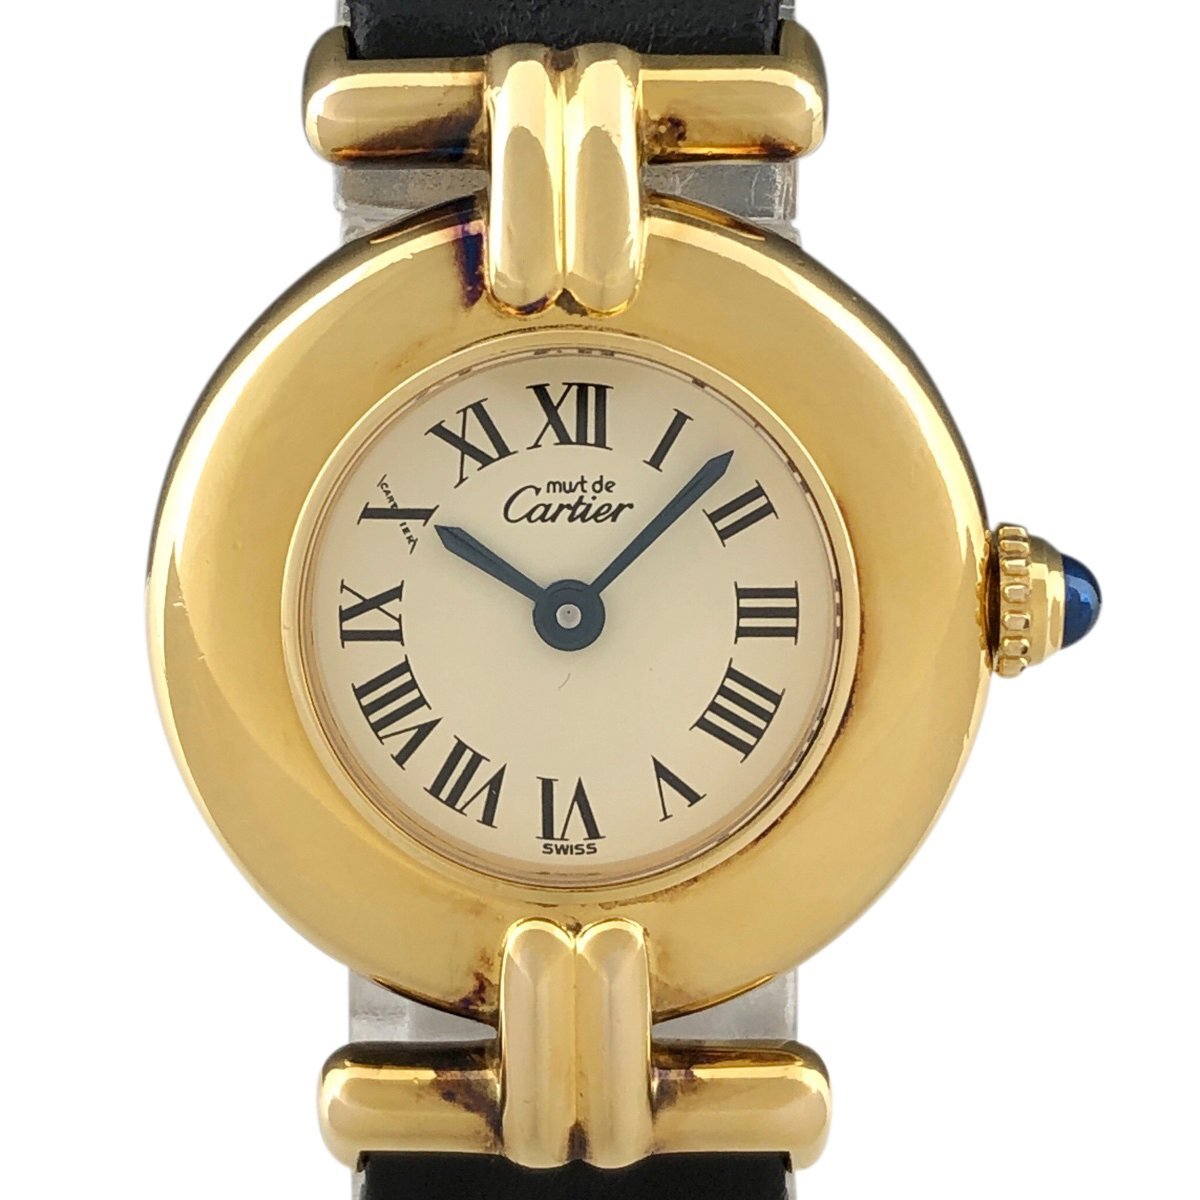  Cartier CARTIER Must ko Rize verumeiyu590002 wristwatch silver 925 GP leather quartz ivory lady's [ used ]